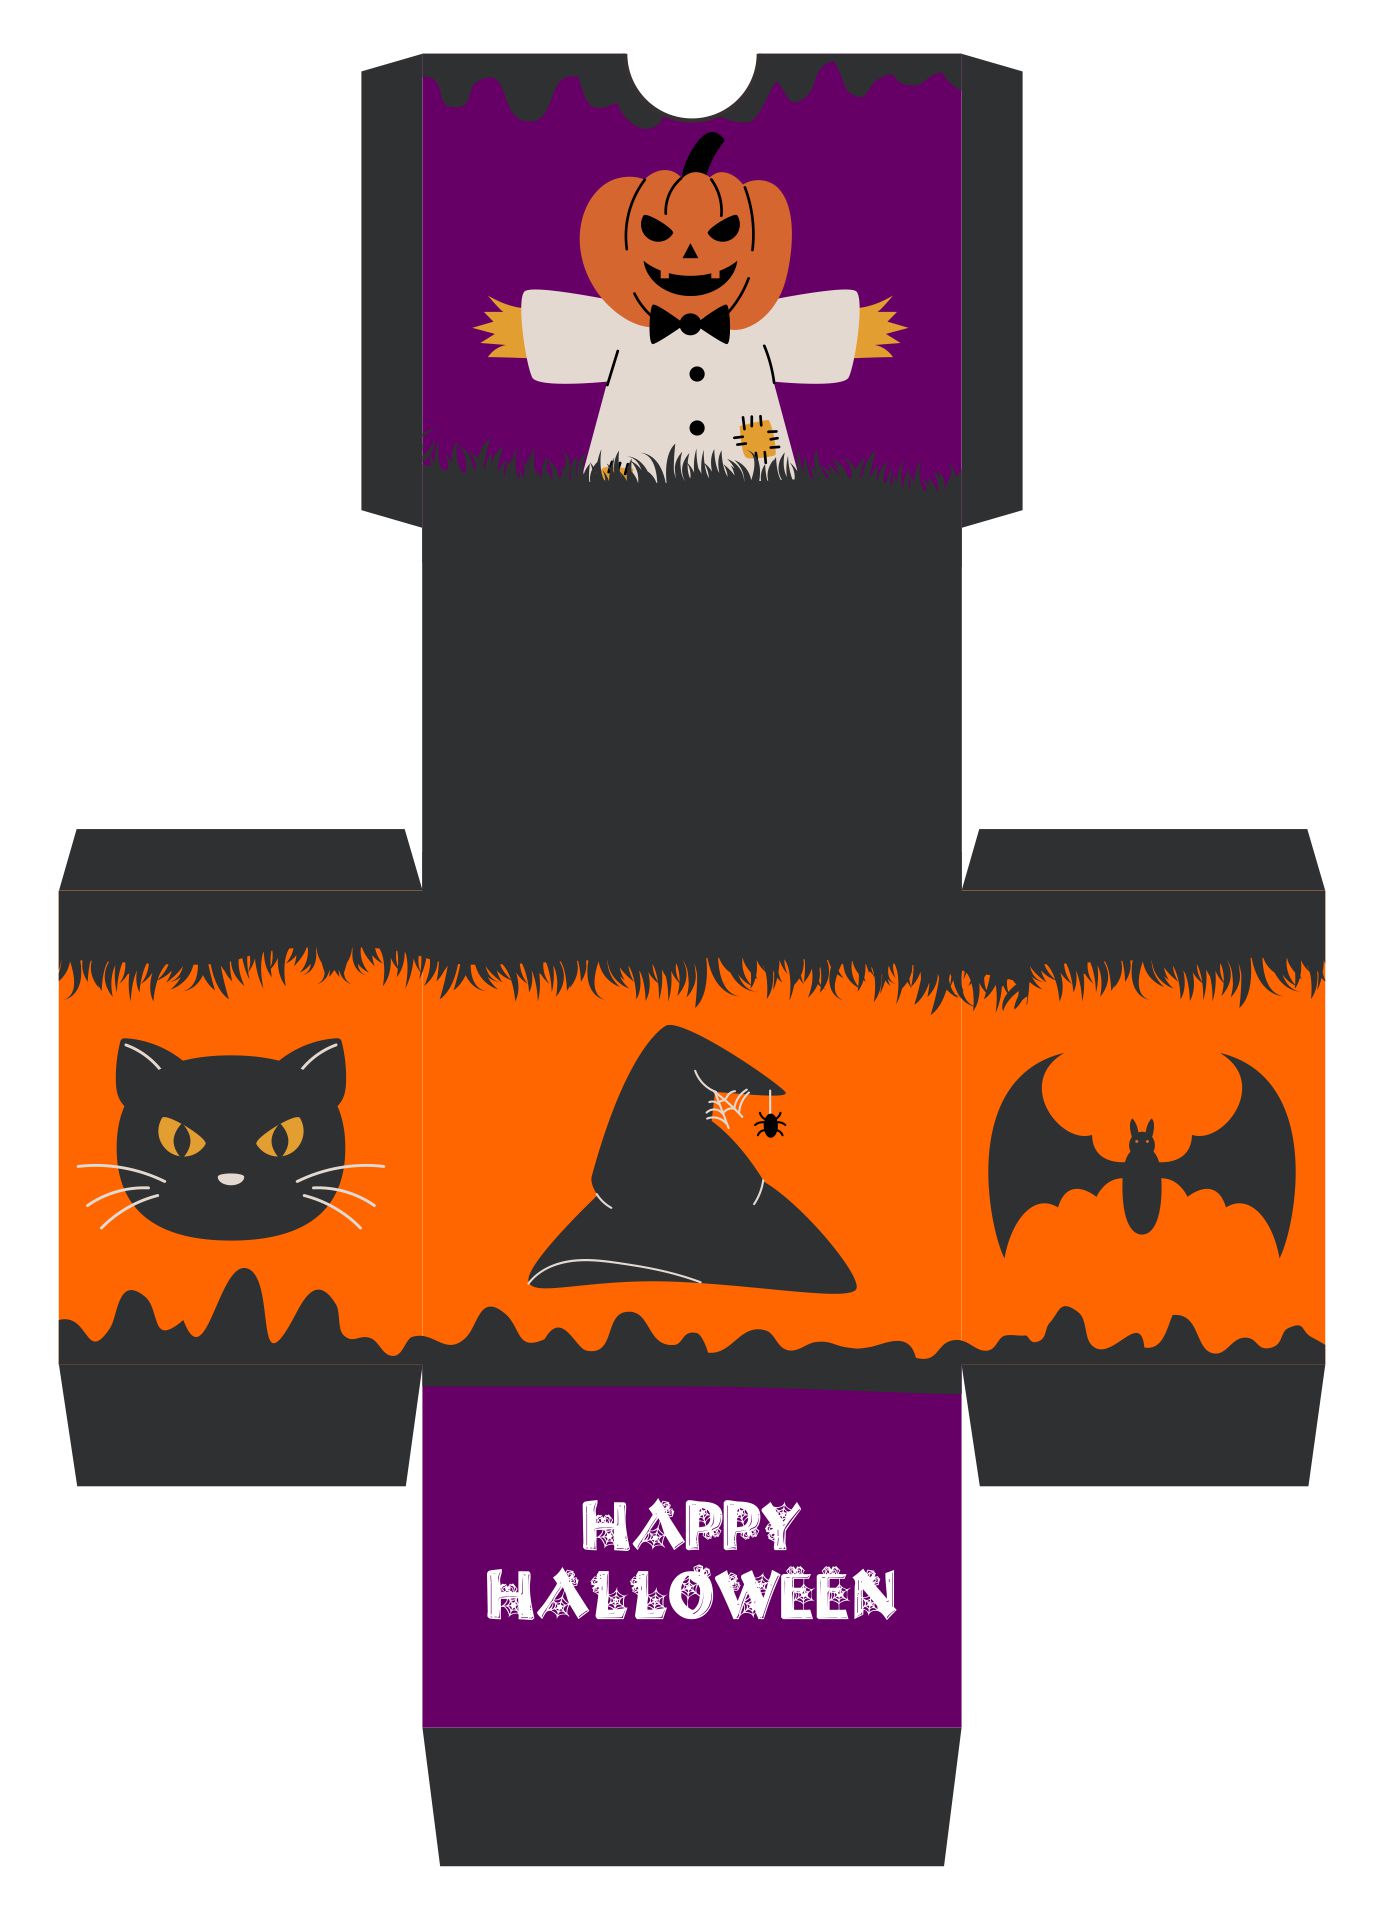 Printable Halloween Treat Boxes To Make